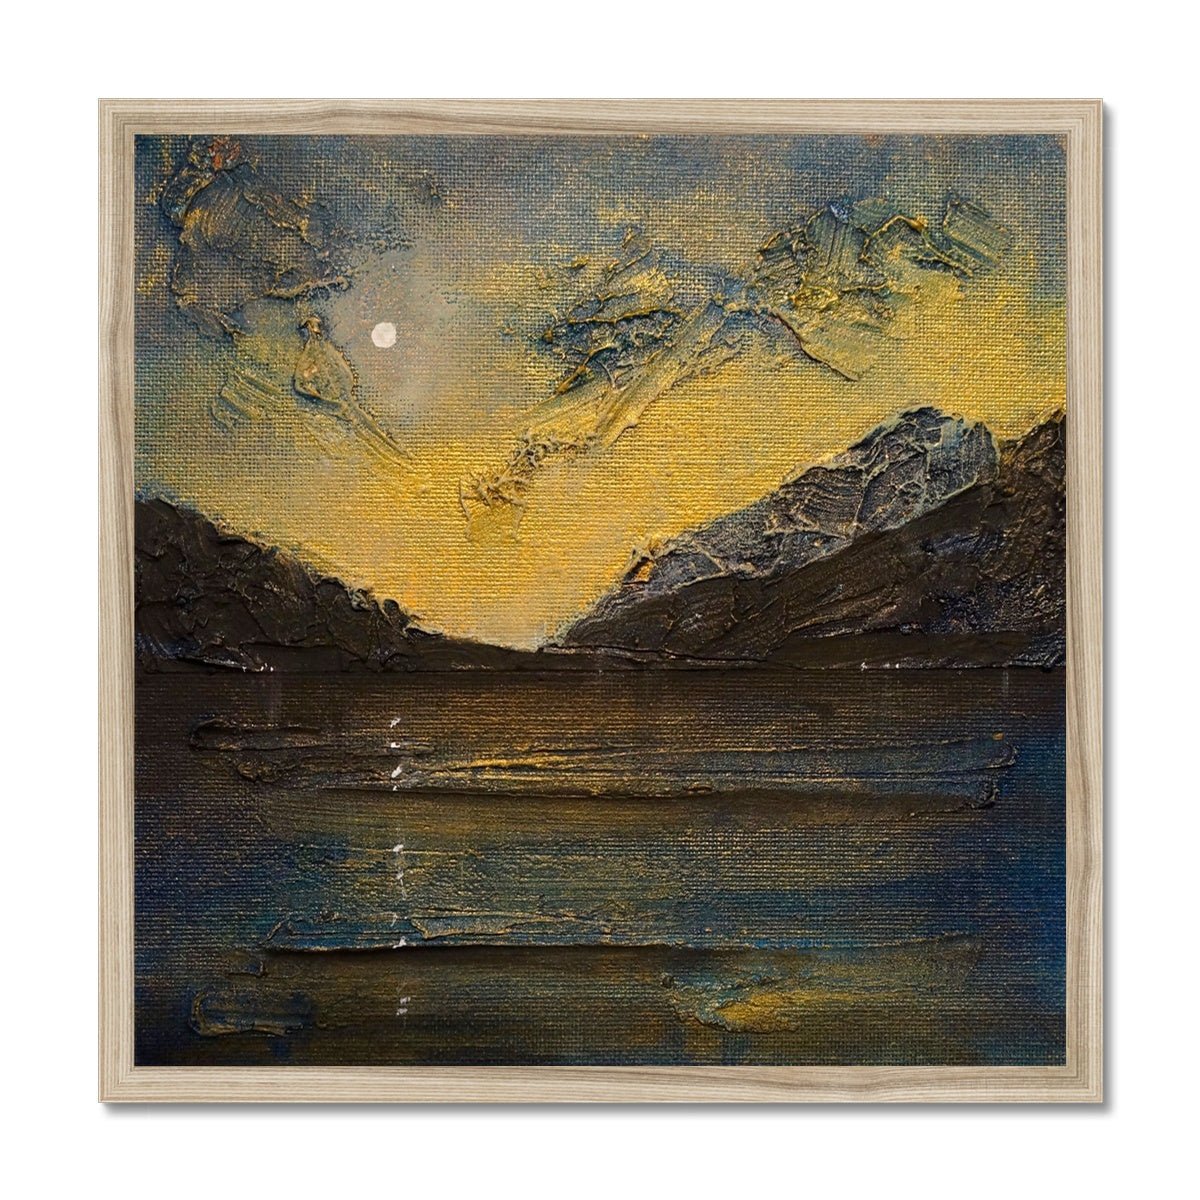 Loch Lomond Moonlight Painting | Framed Prints From Scotland-Framed Prints-Scottish Lochs & Mountains Art Gallery-20"x20"-Natural Frame-Paintings, Prints, Homeware, Art Gifts From Scotland By Scottish Artist Kevin Hunter